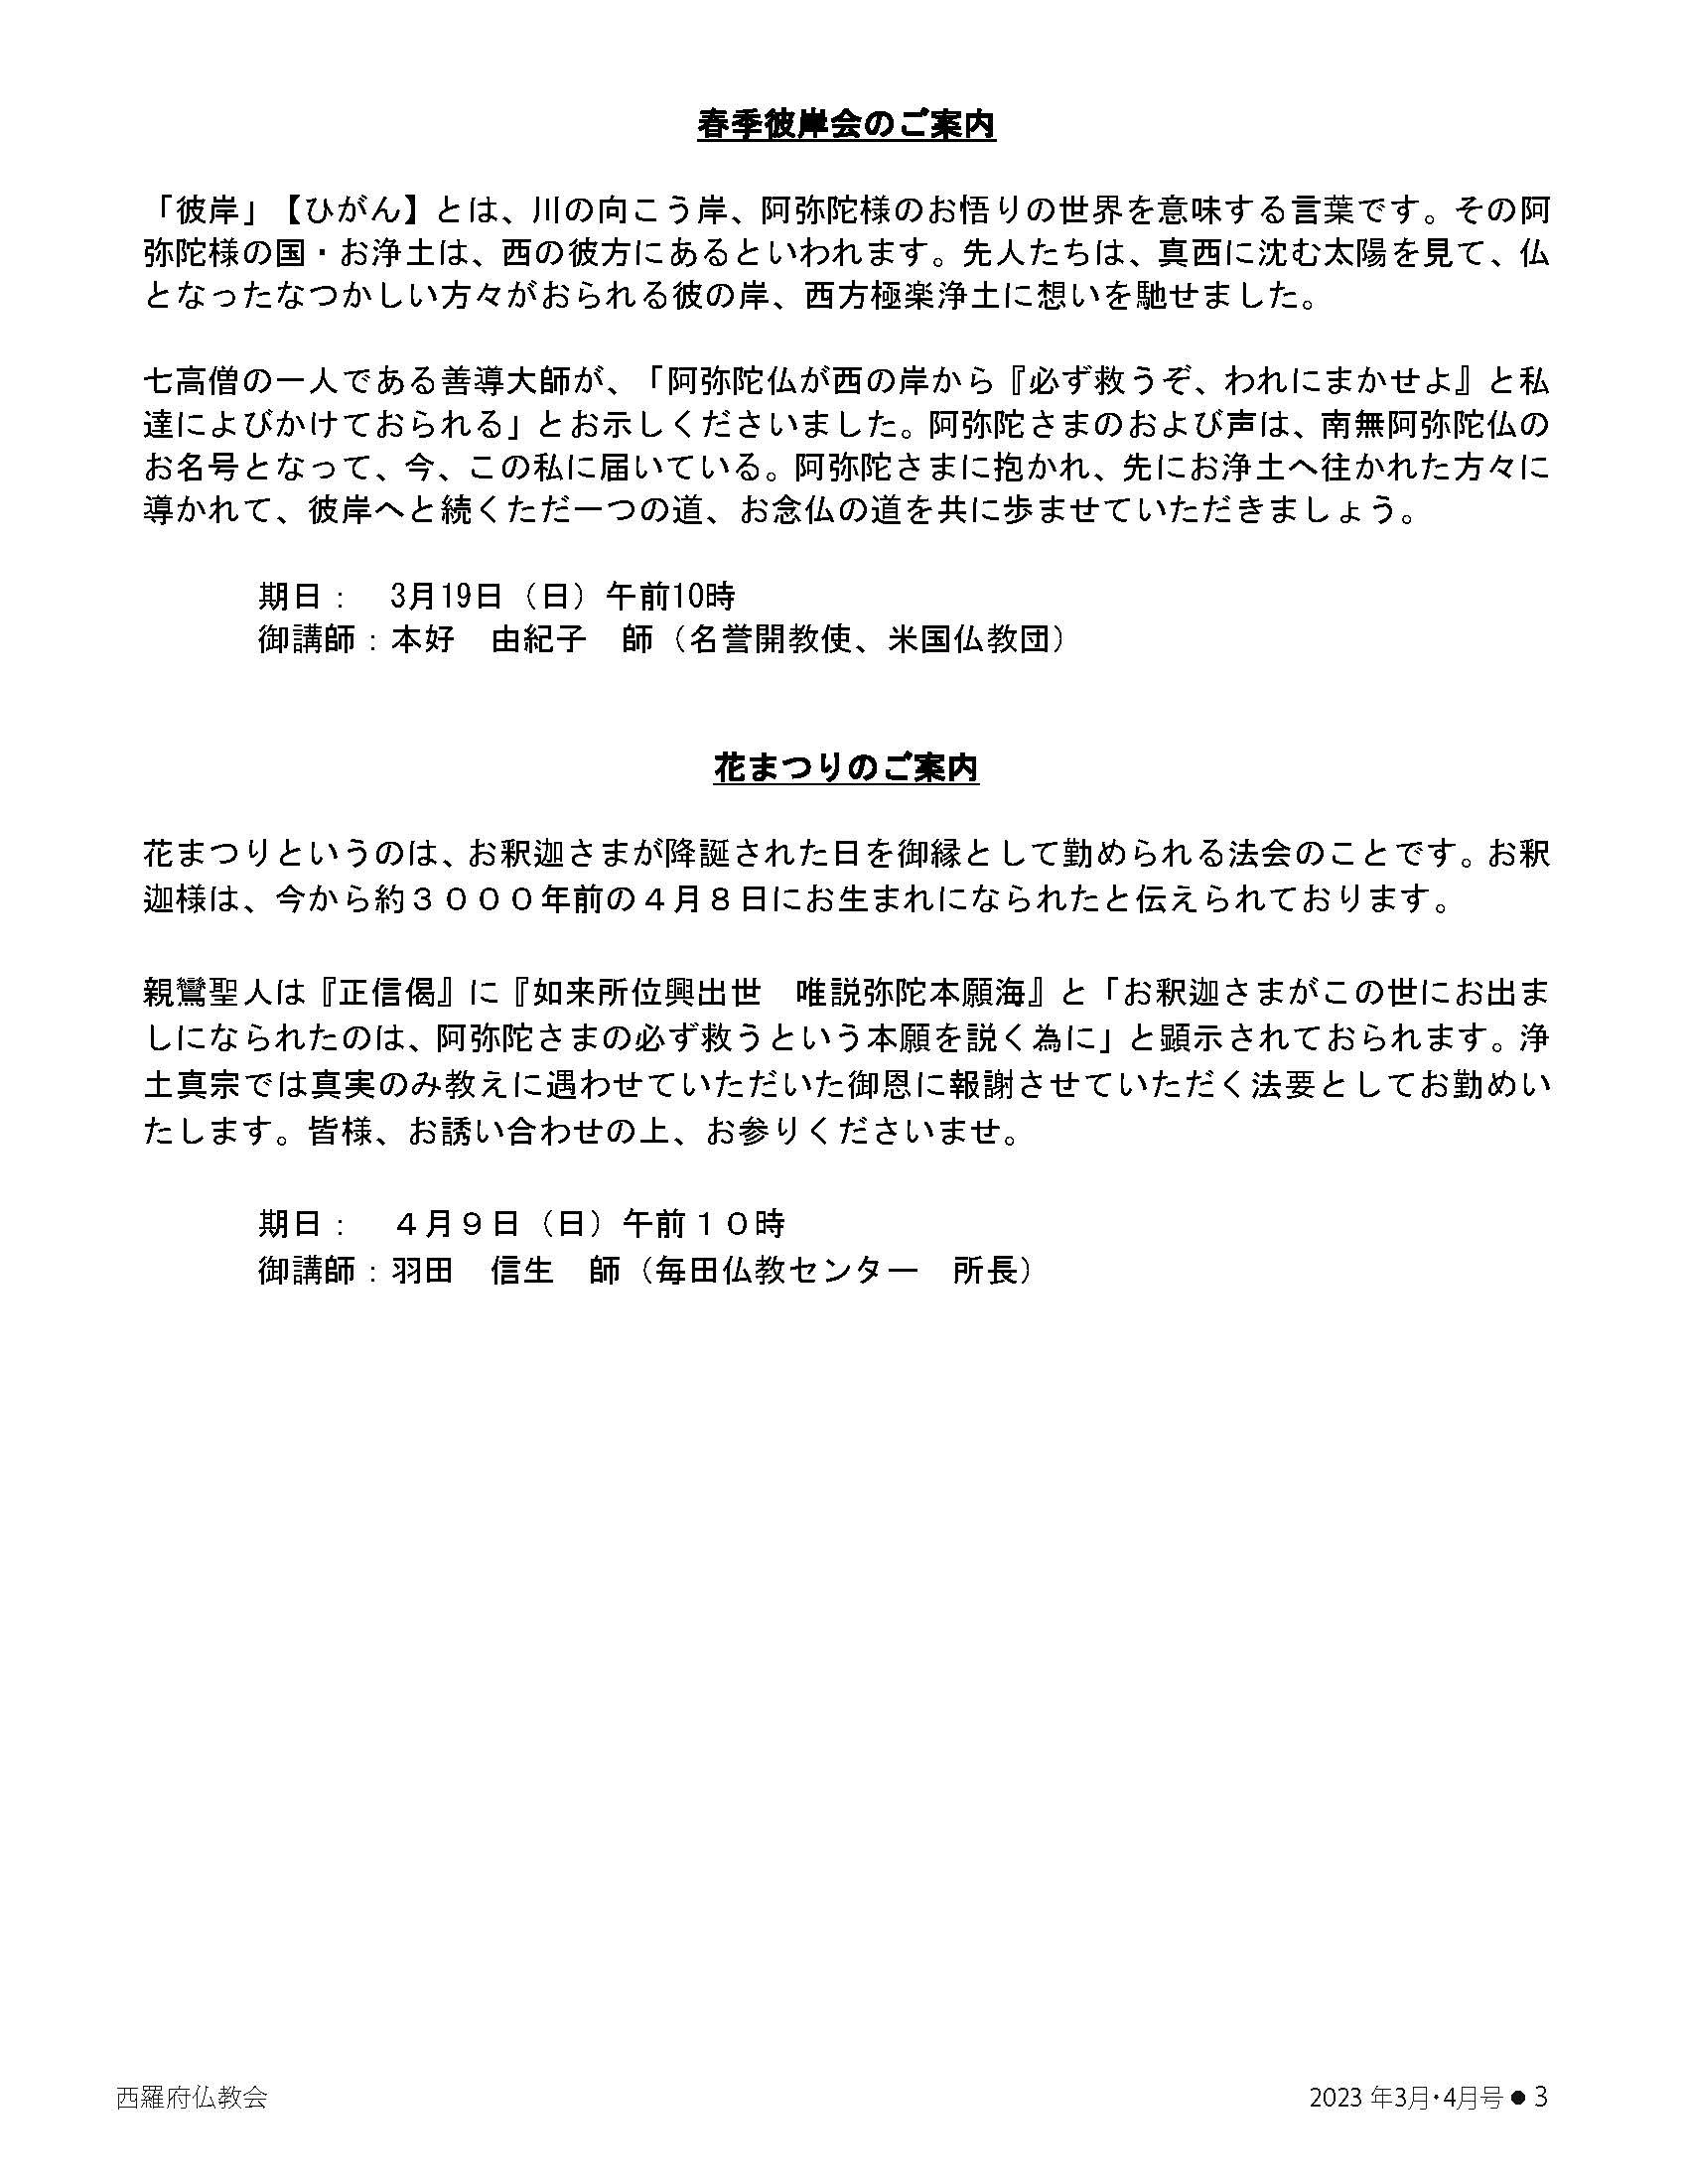 WLABT Japanese Bulletin_Mar-April_2023_FINAL_web_1 (J)_Page_03.jpg